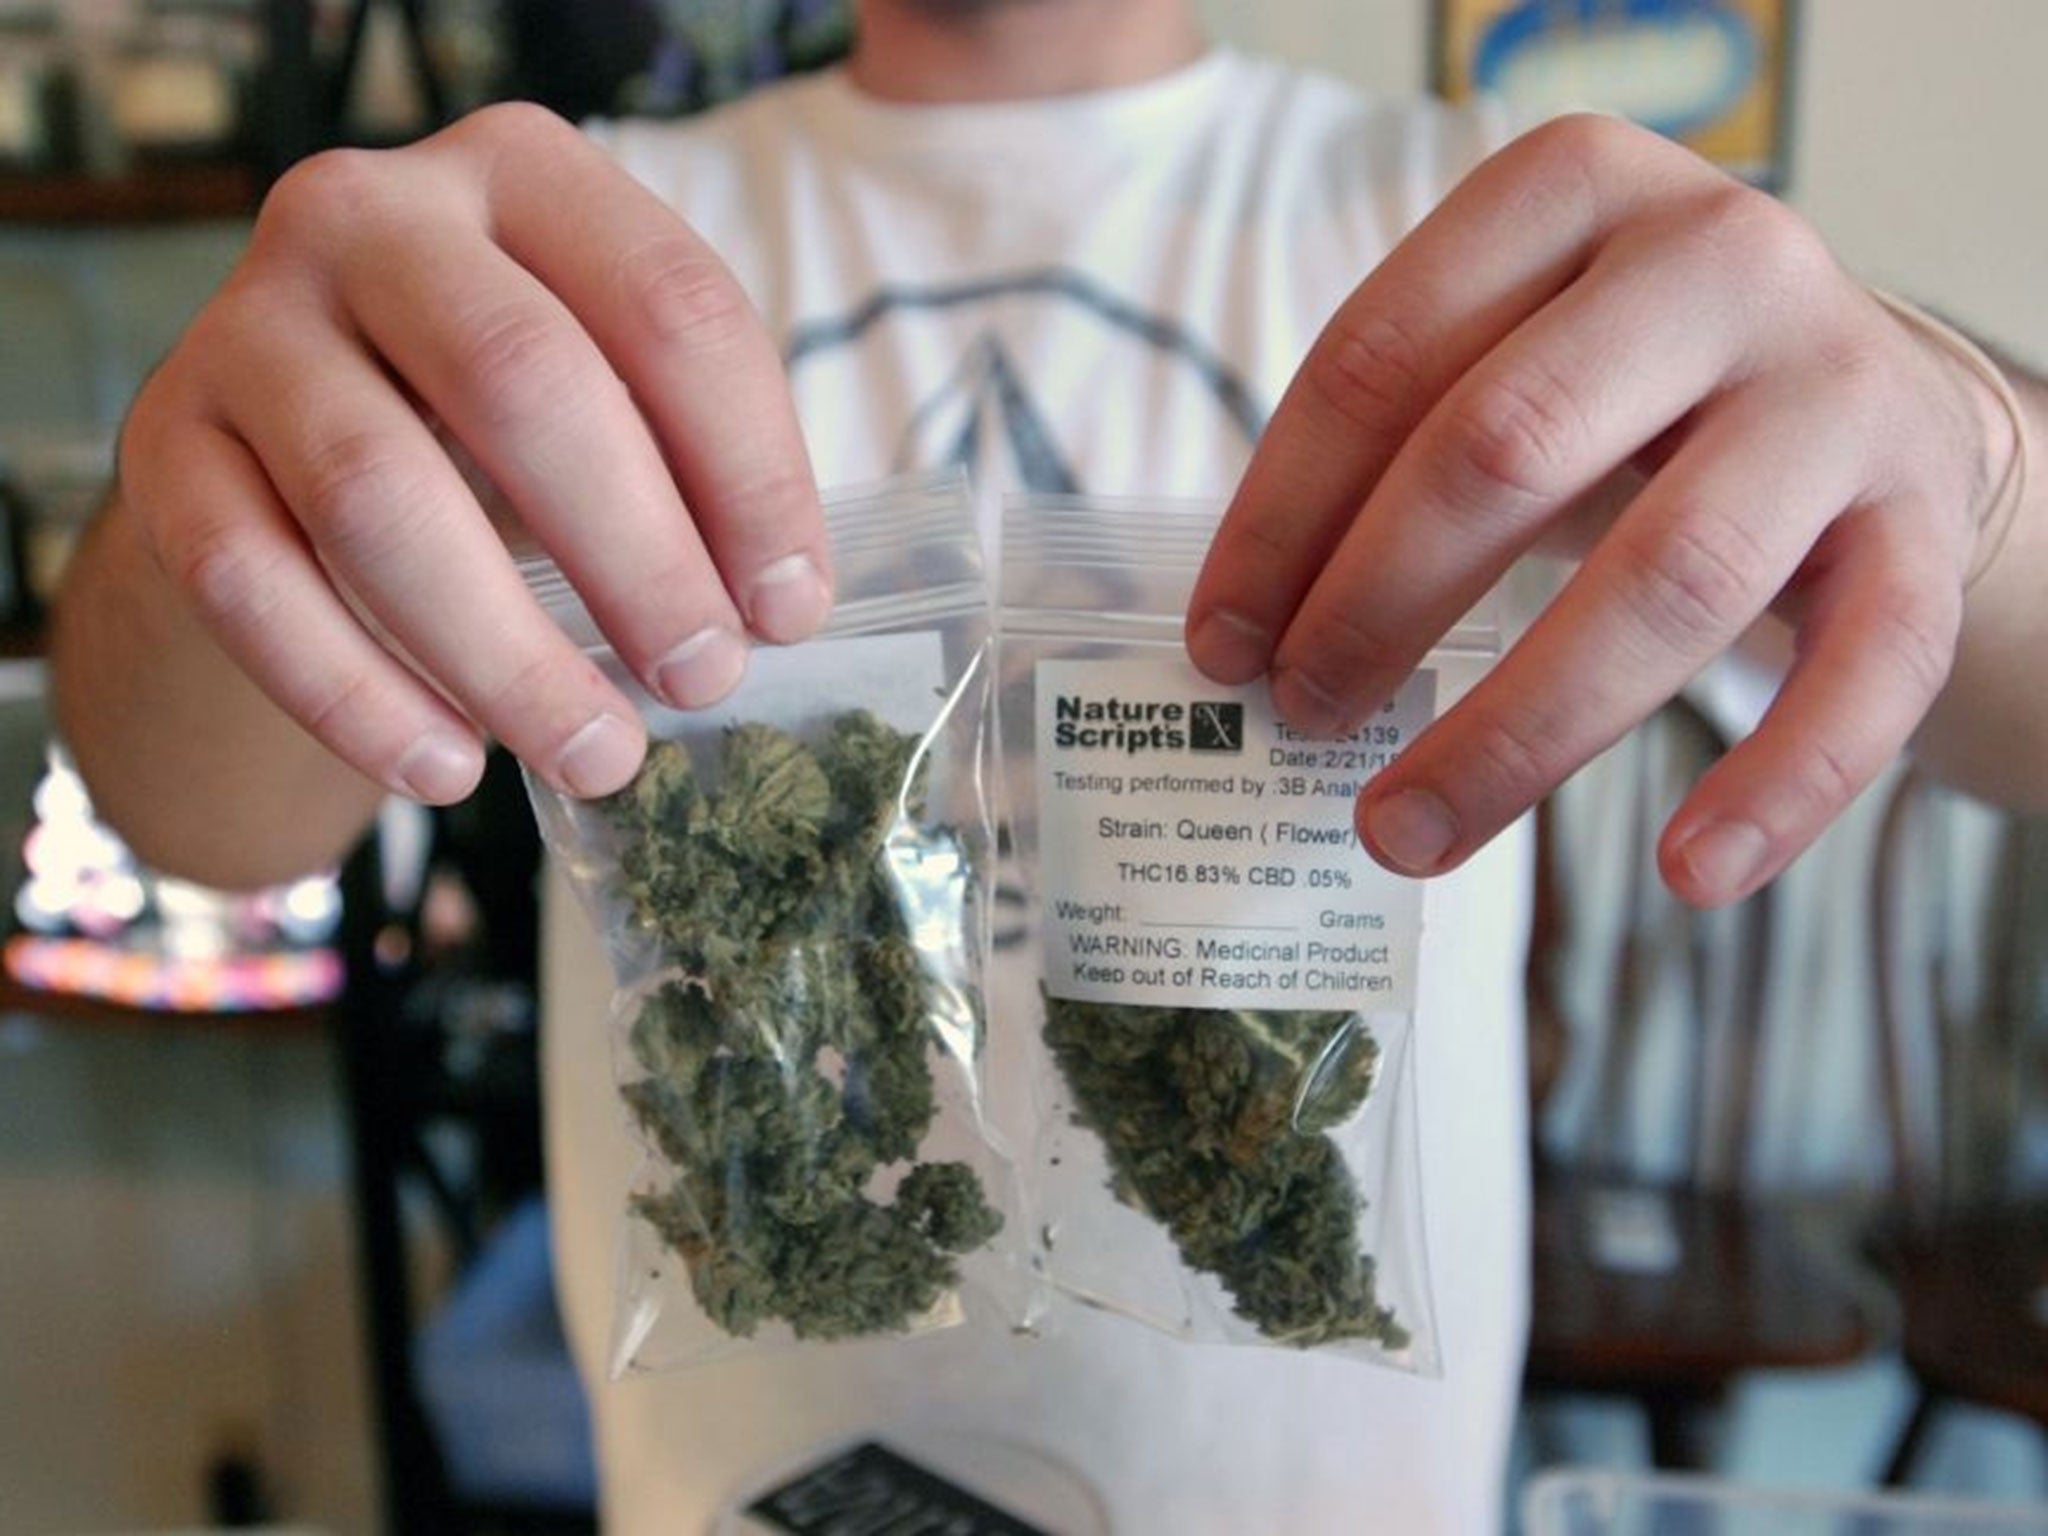 Bags of marijuana buds being prepared for sale in Oregon